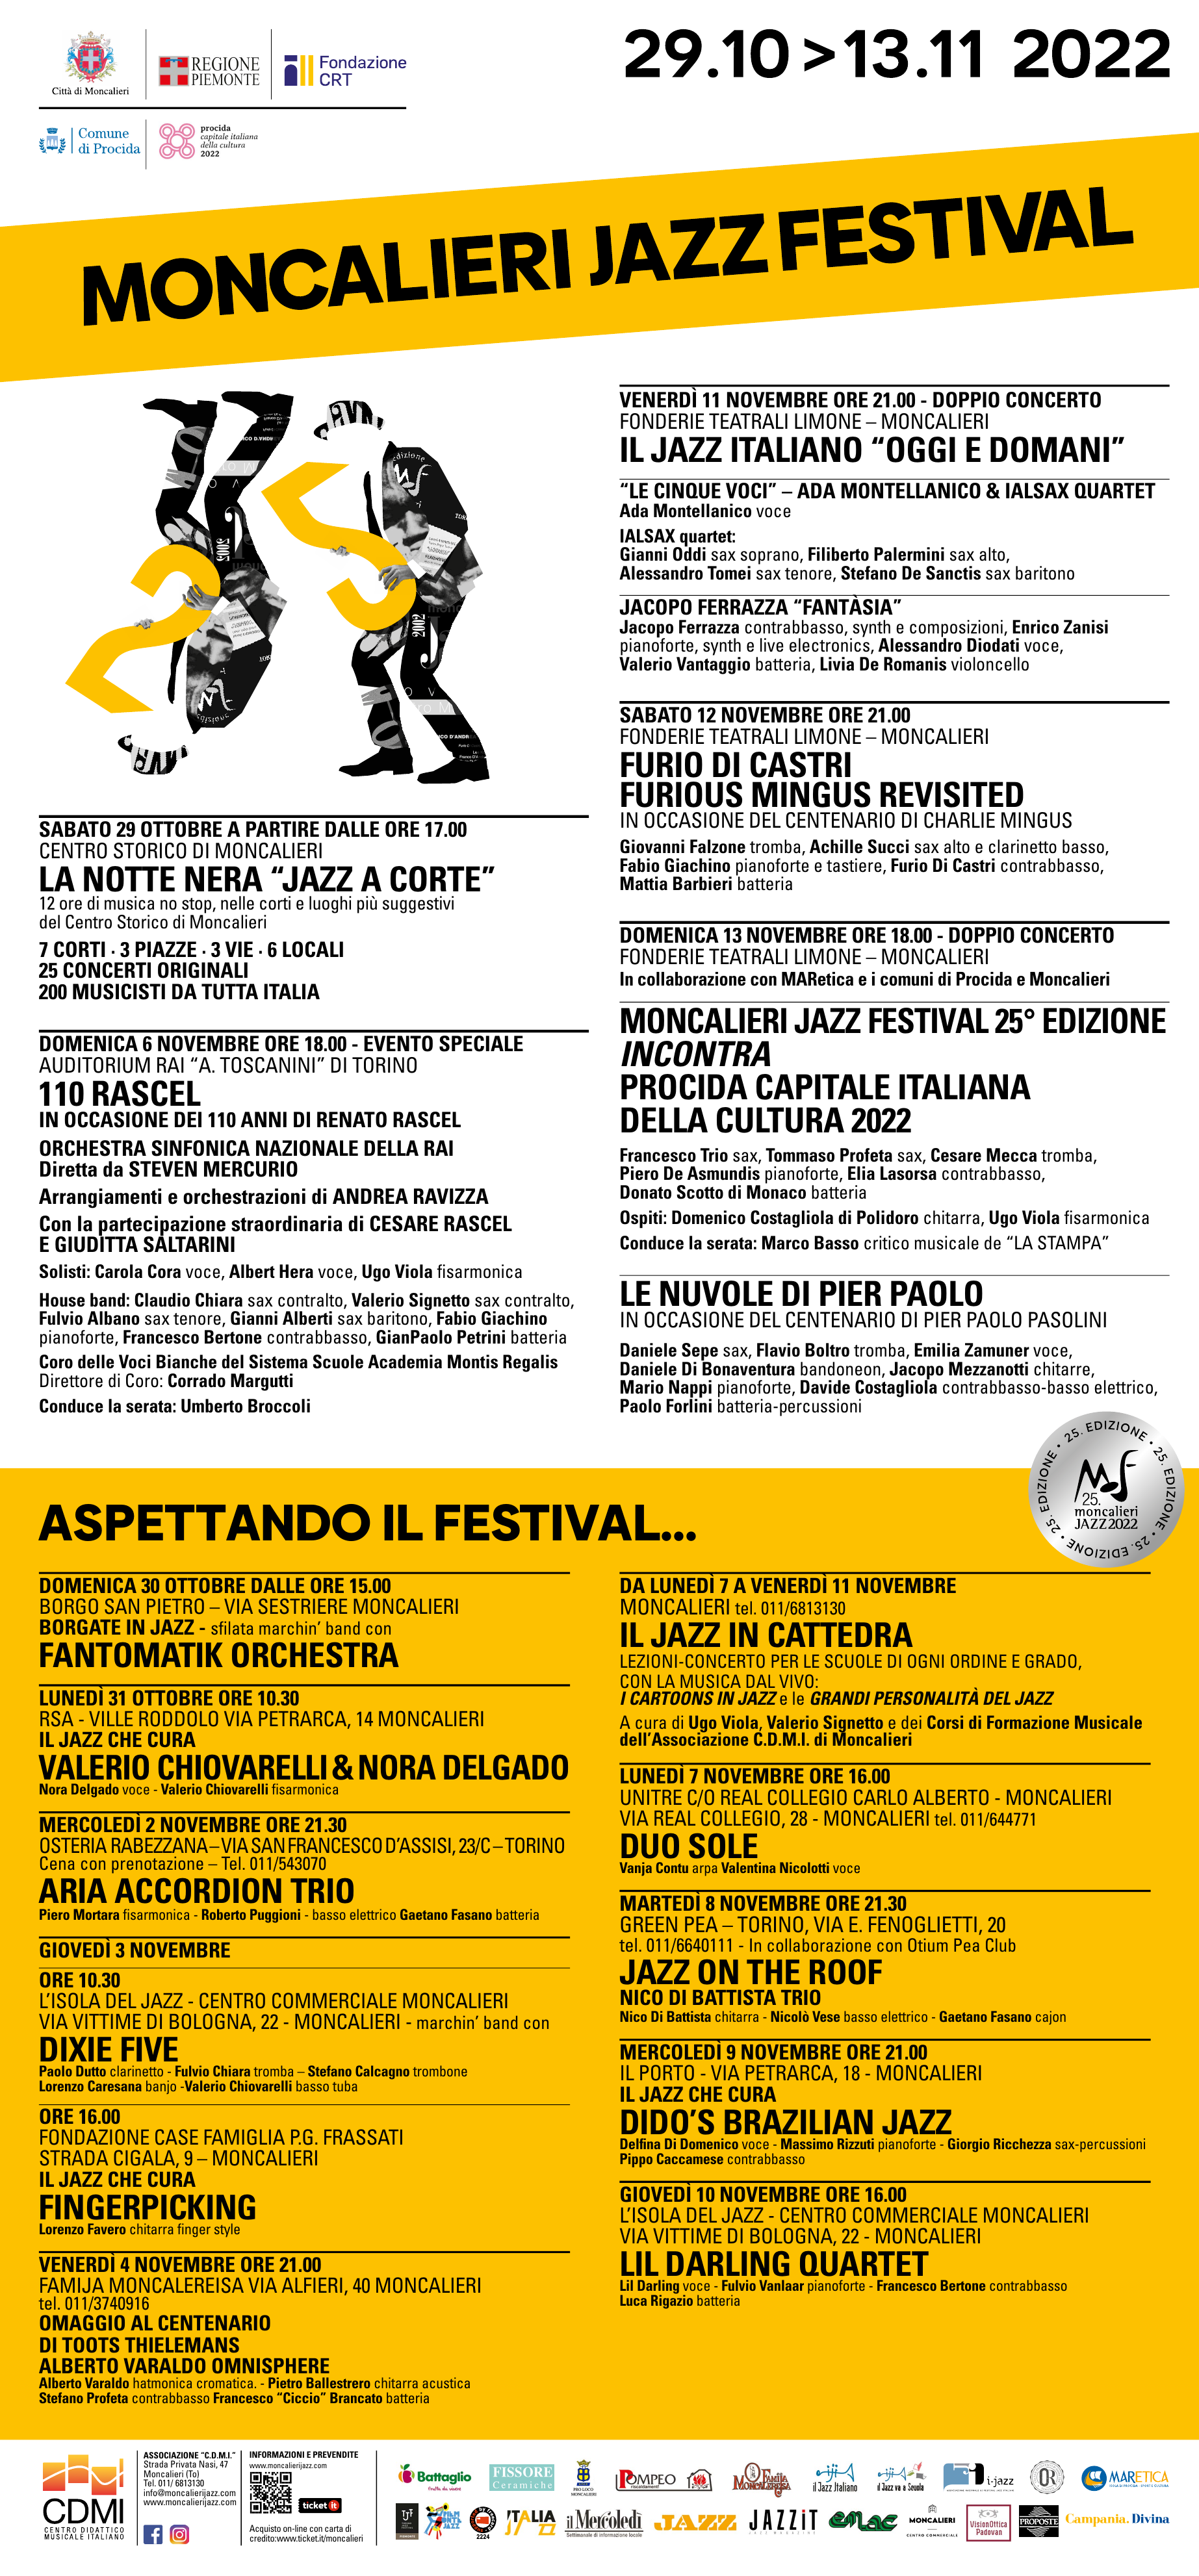 Moncalieri Jazz Festival - XXV Edizione dal 29.10 al 13.11.2022